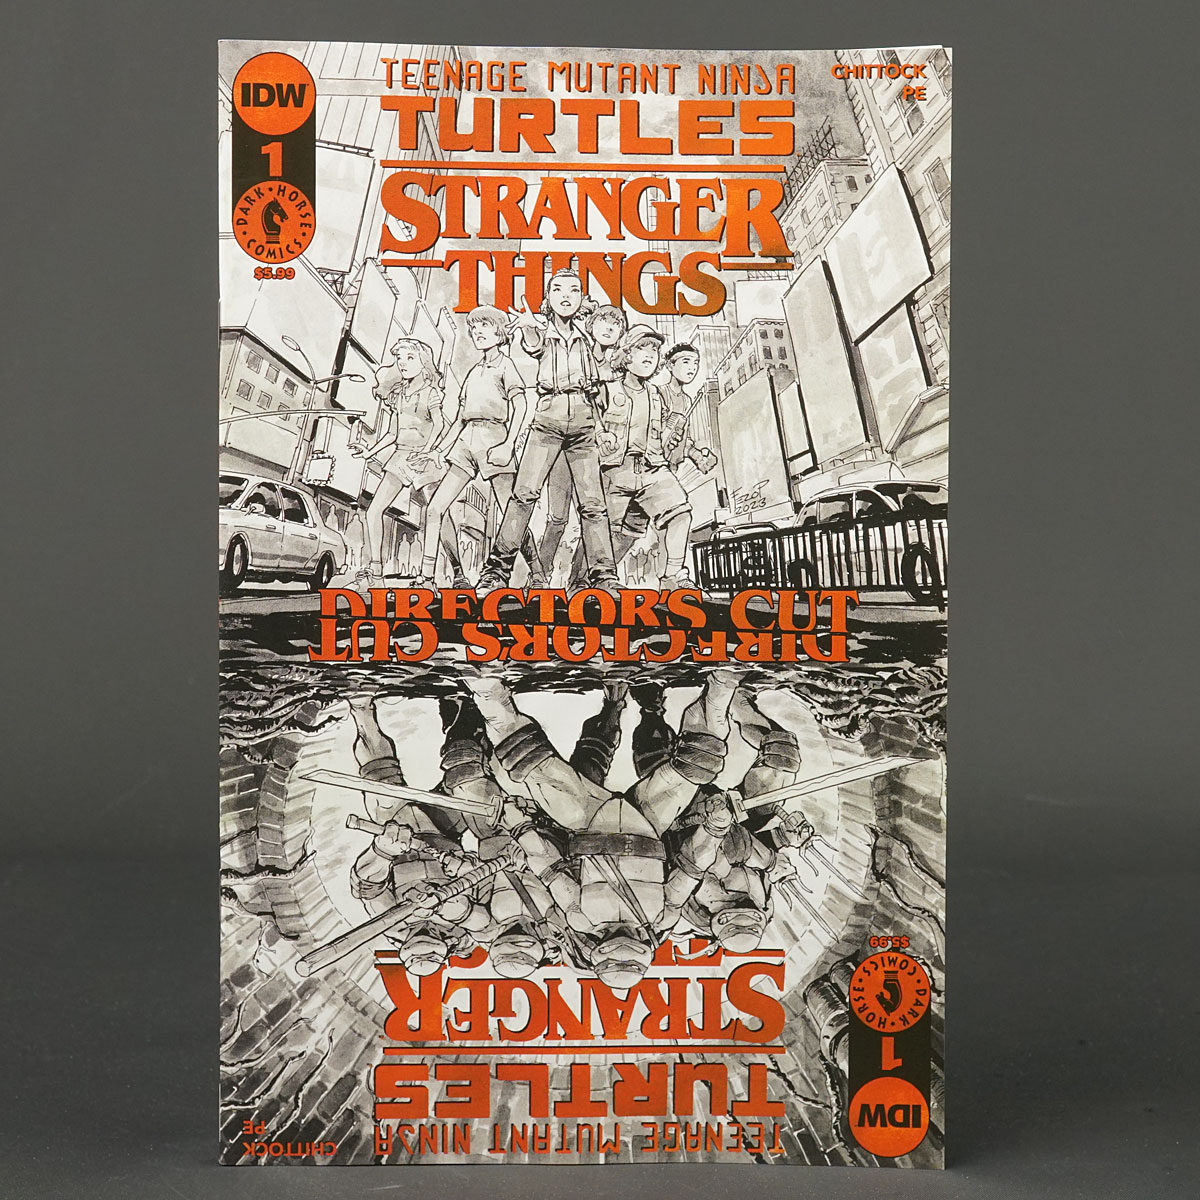 TMNT X STRANGER THINGS #1 Directors Cut IDW Comics SEP231321 (CA) Pe (W)Chittock